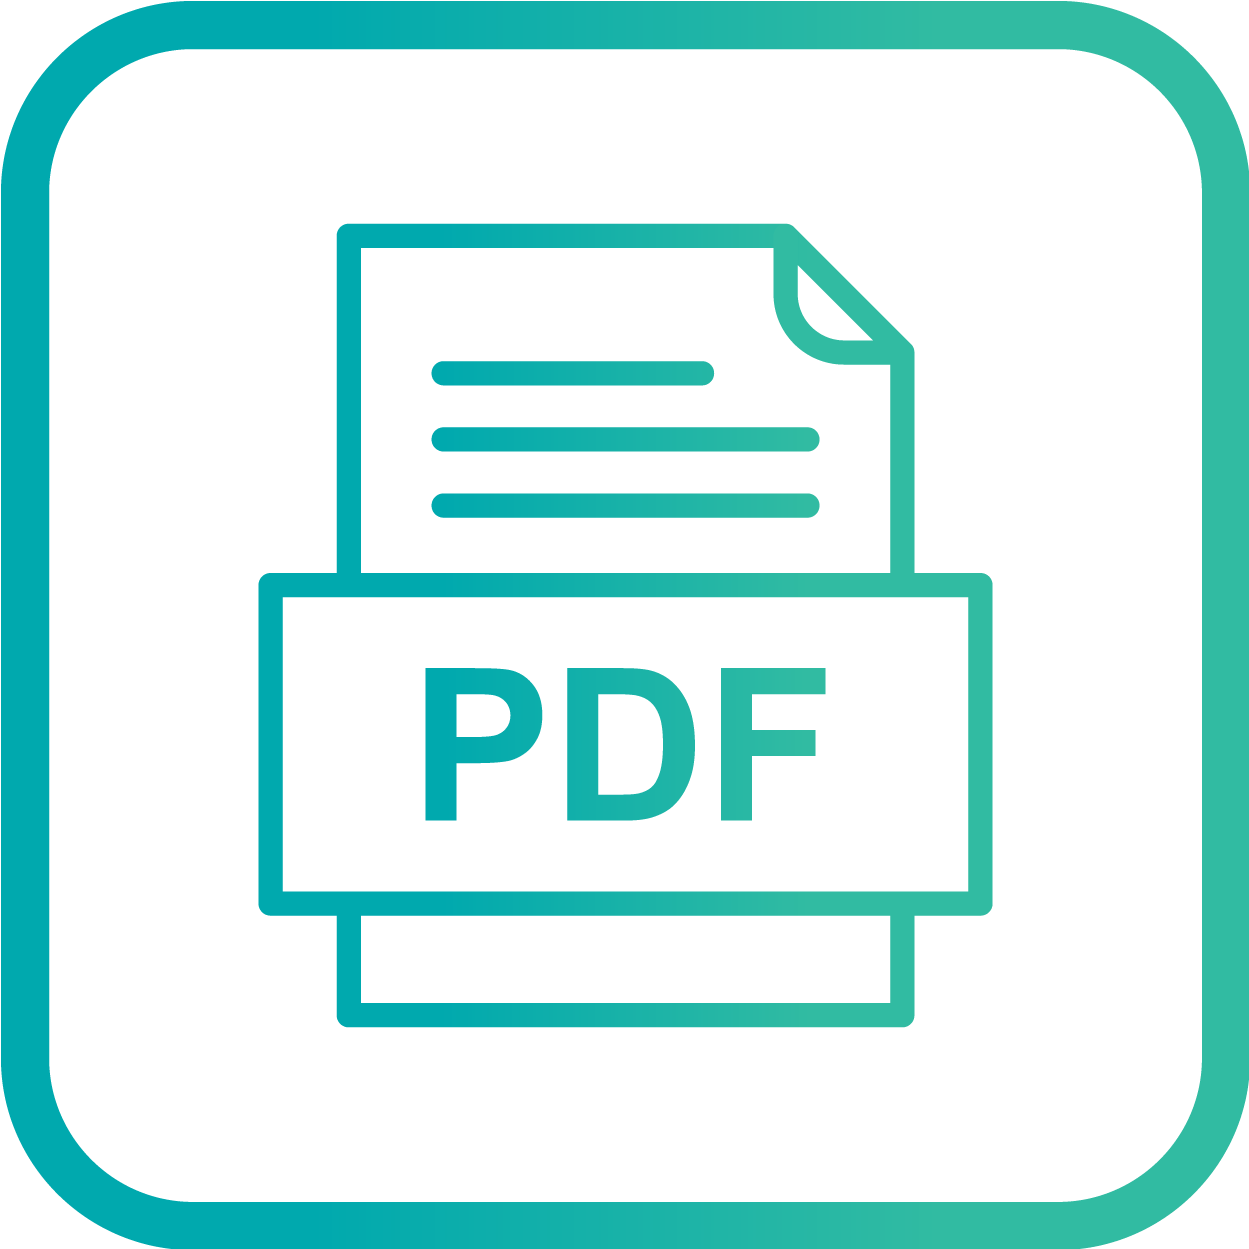 pdf file document icon 4229536